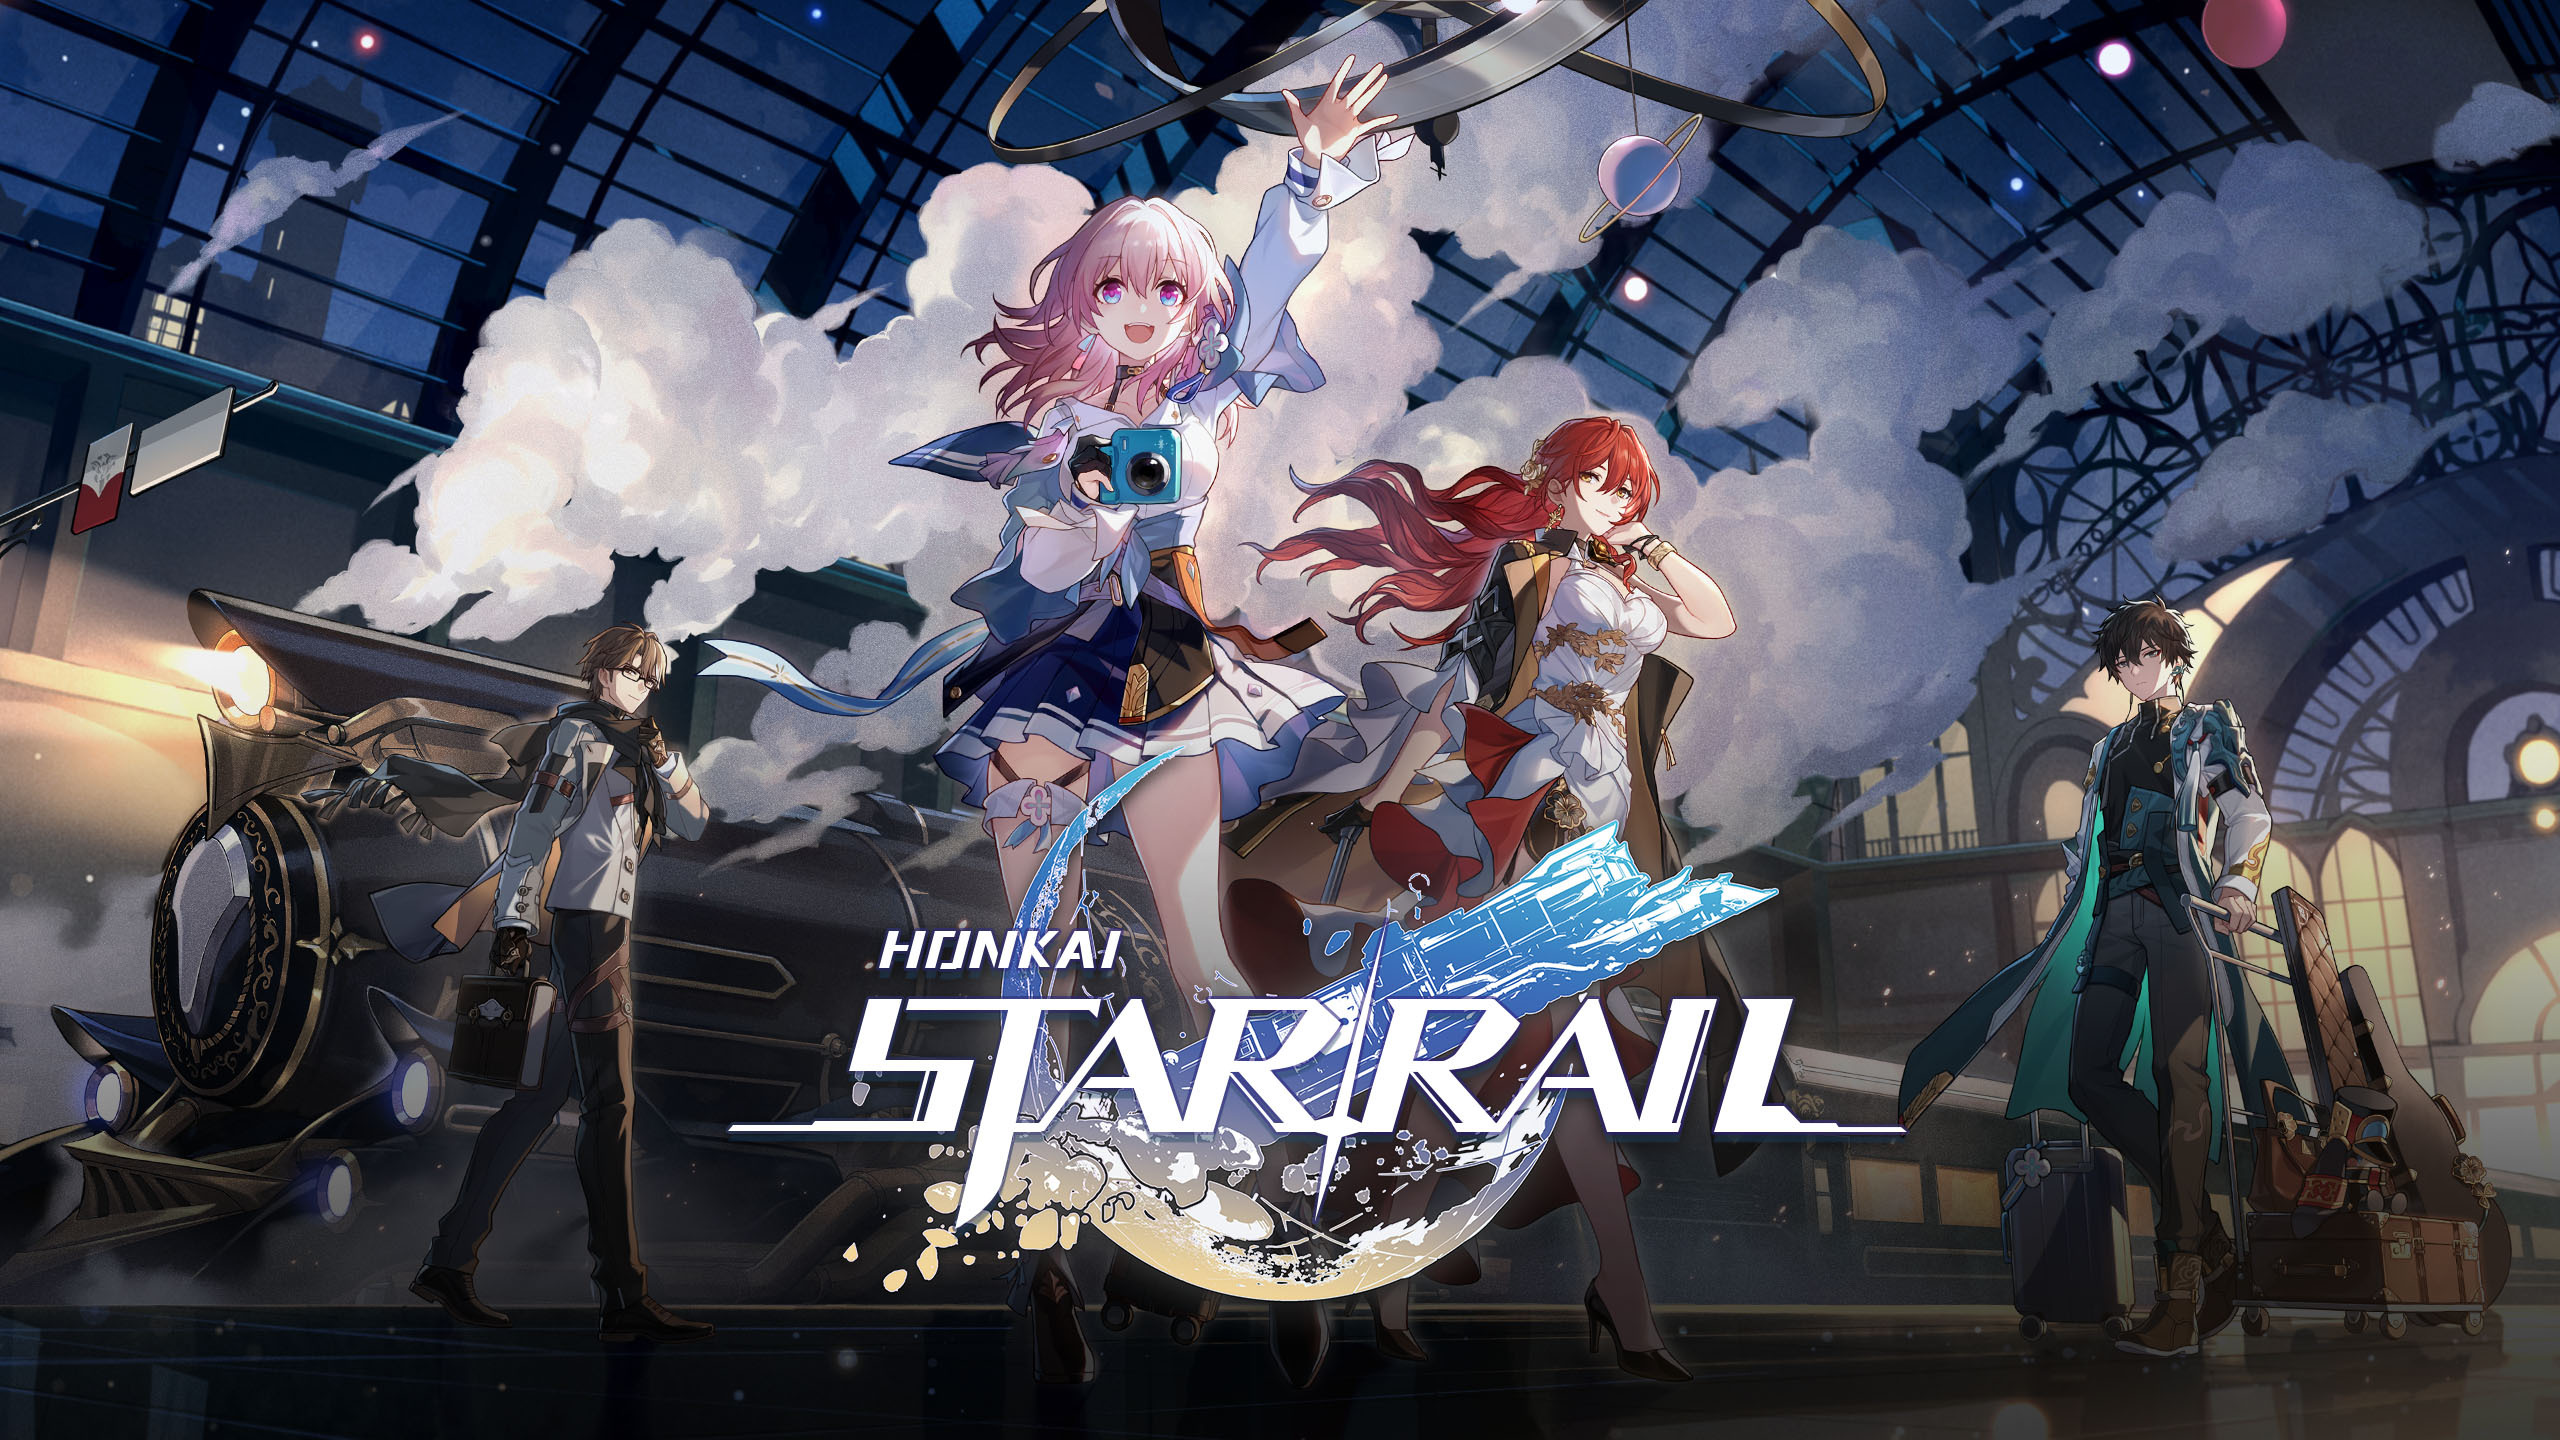 Honkai: Star Rail Version 1.2 Blade and Kafka Banners Detailed